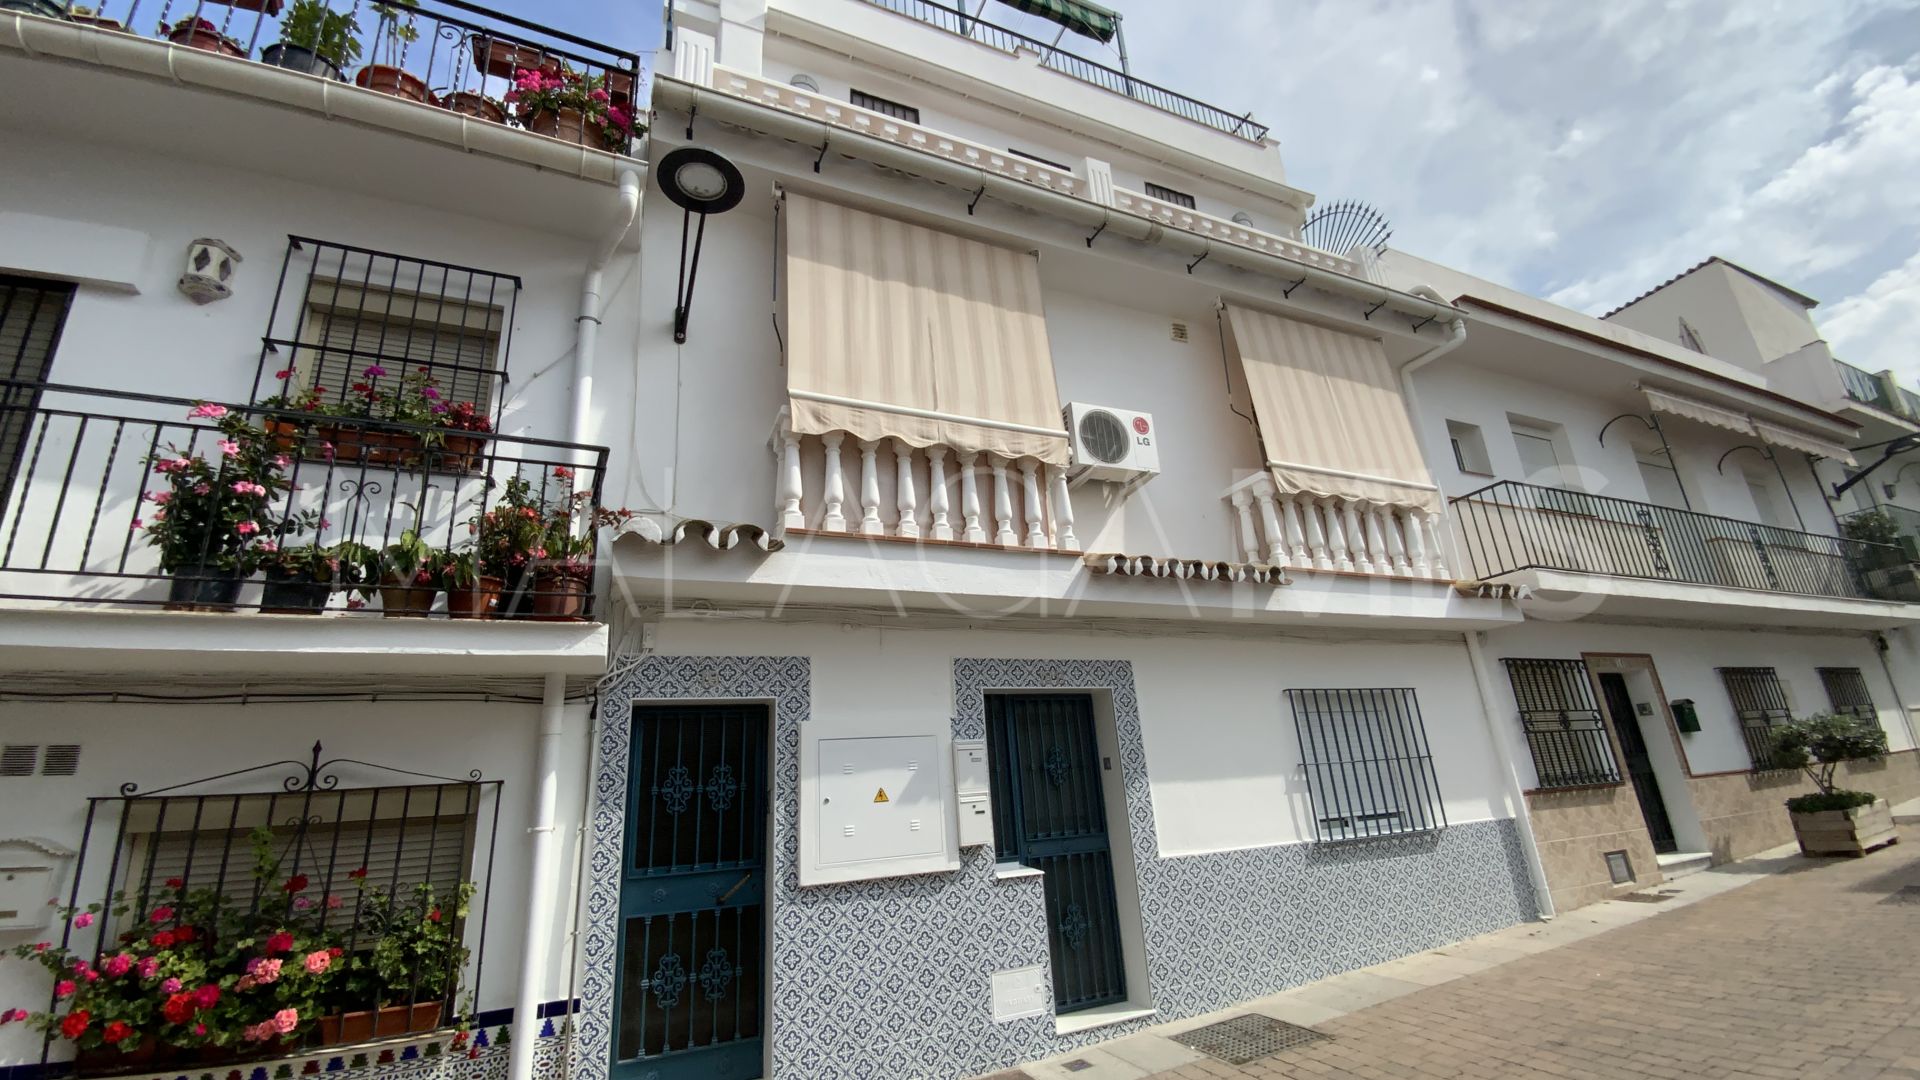 House for sale in San Pedro de Alcantara with 6 bedrooms